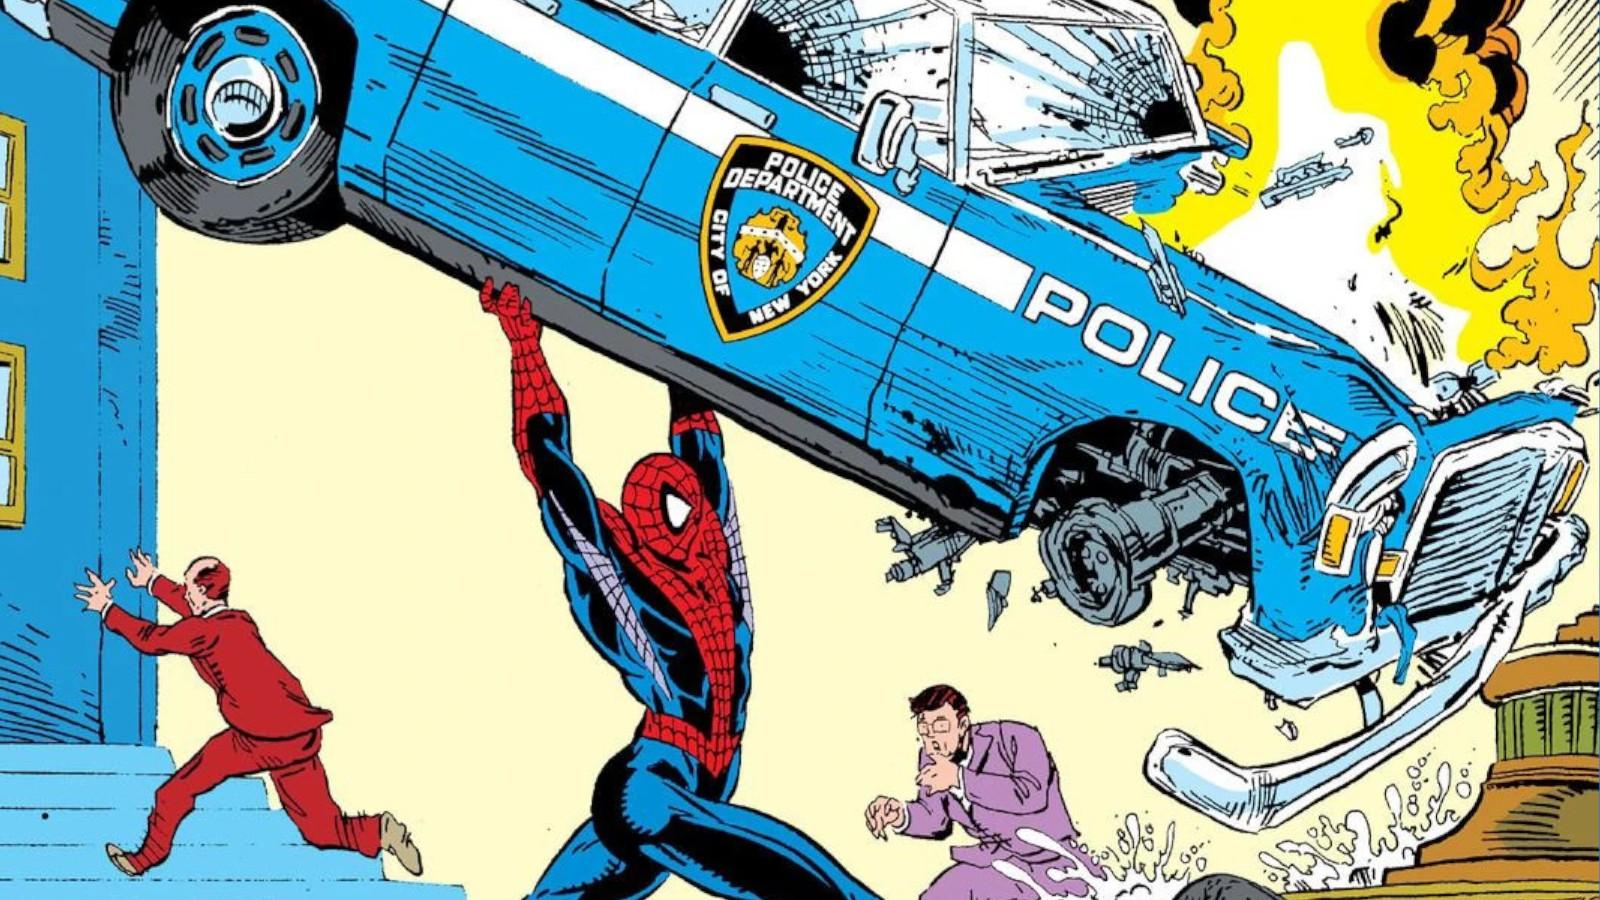 Amazing Spider-Man #306 cover art